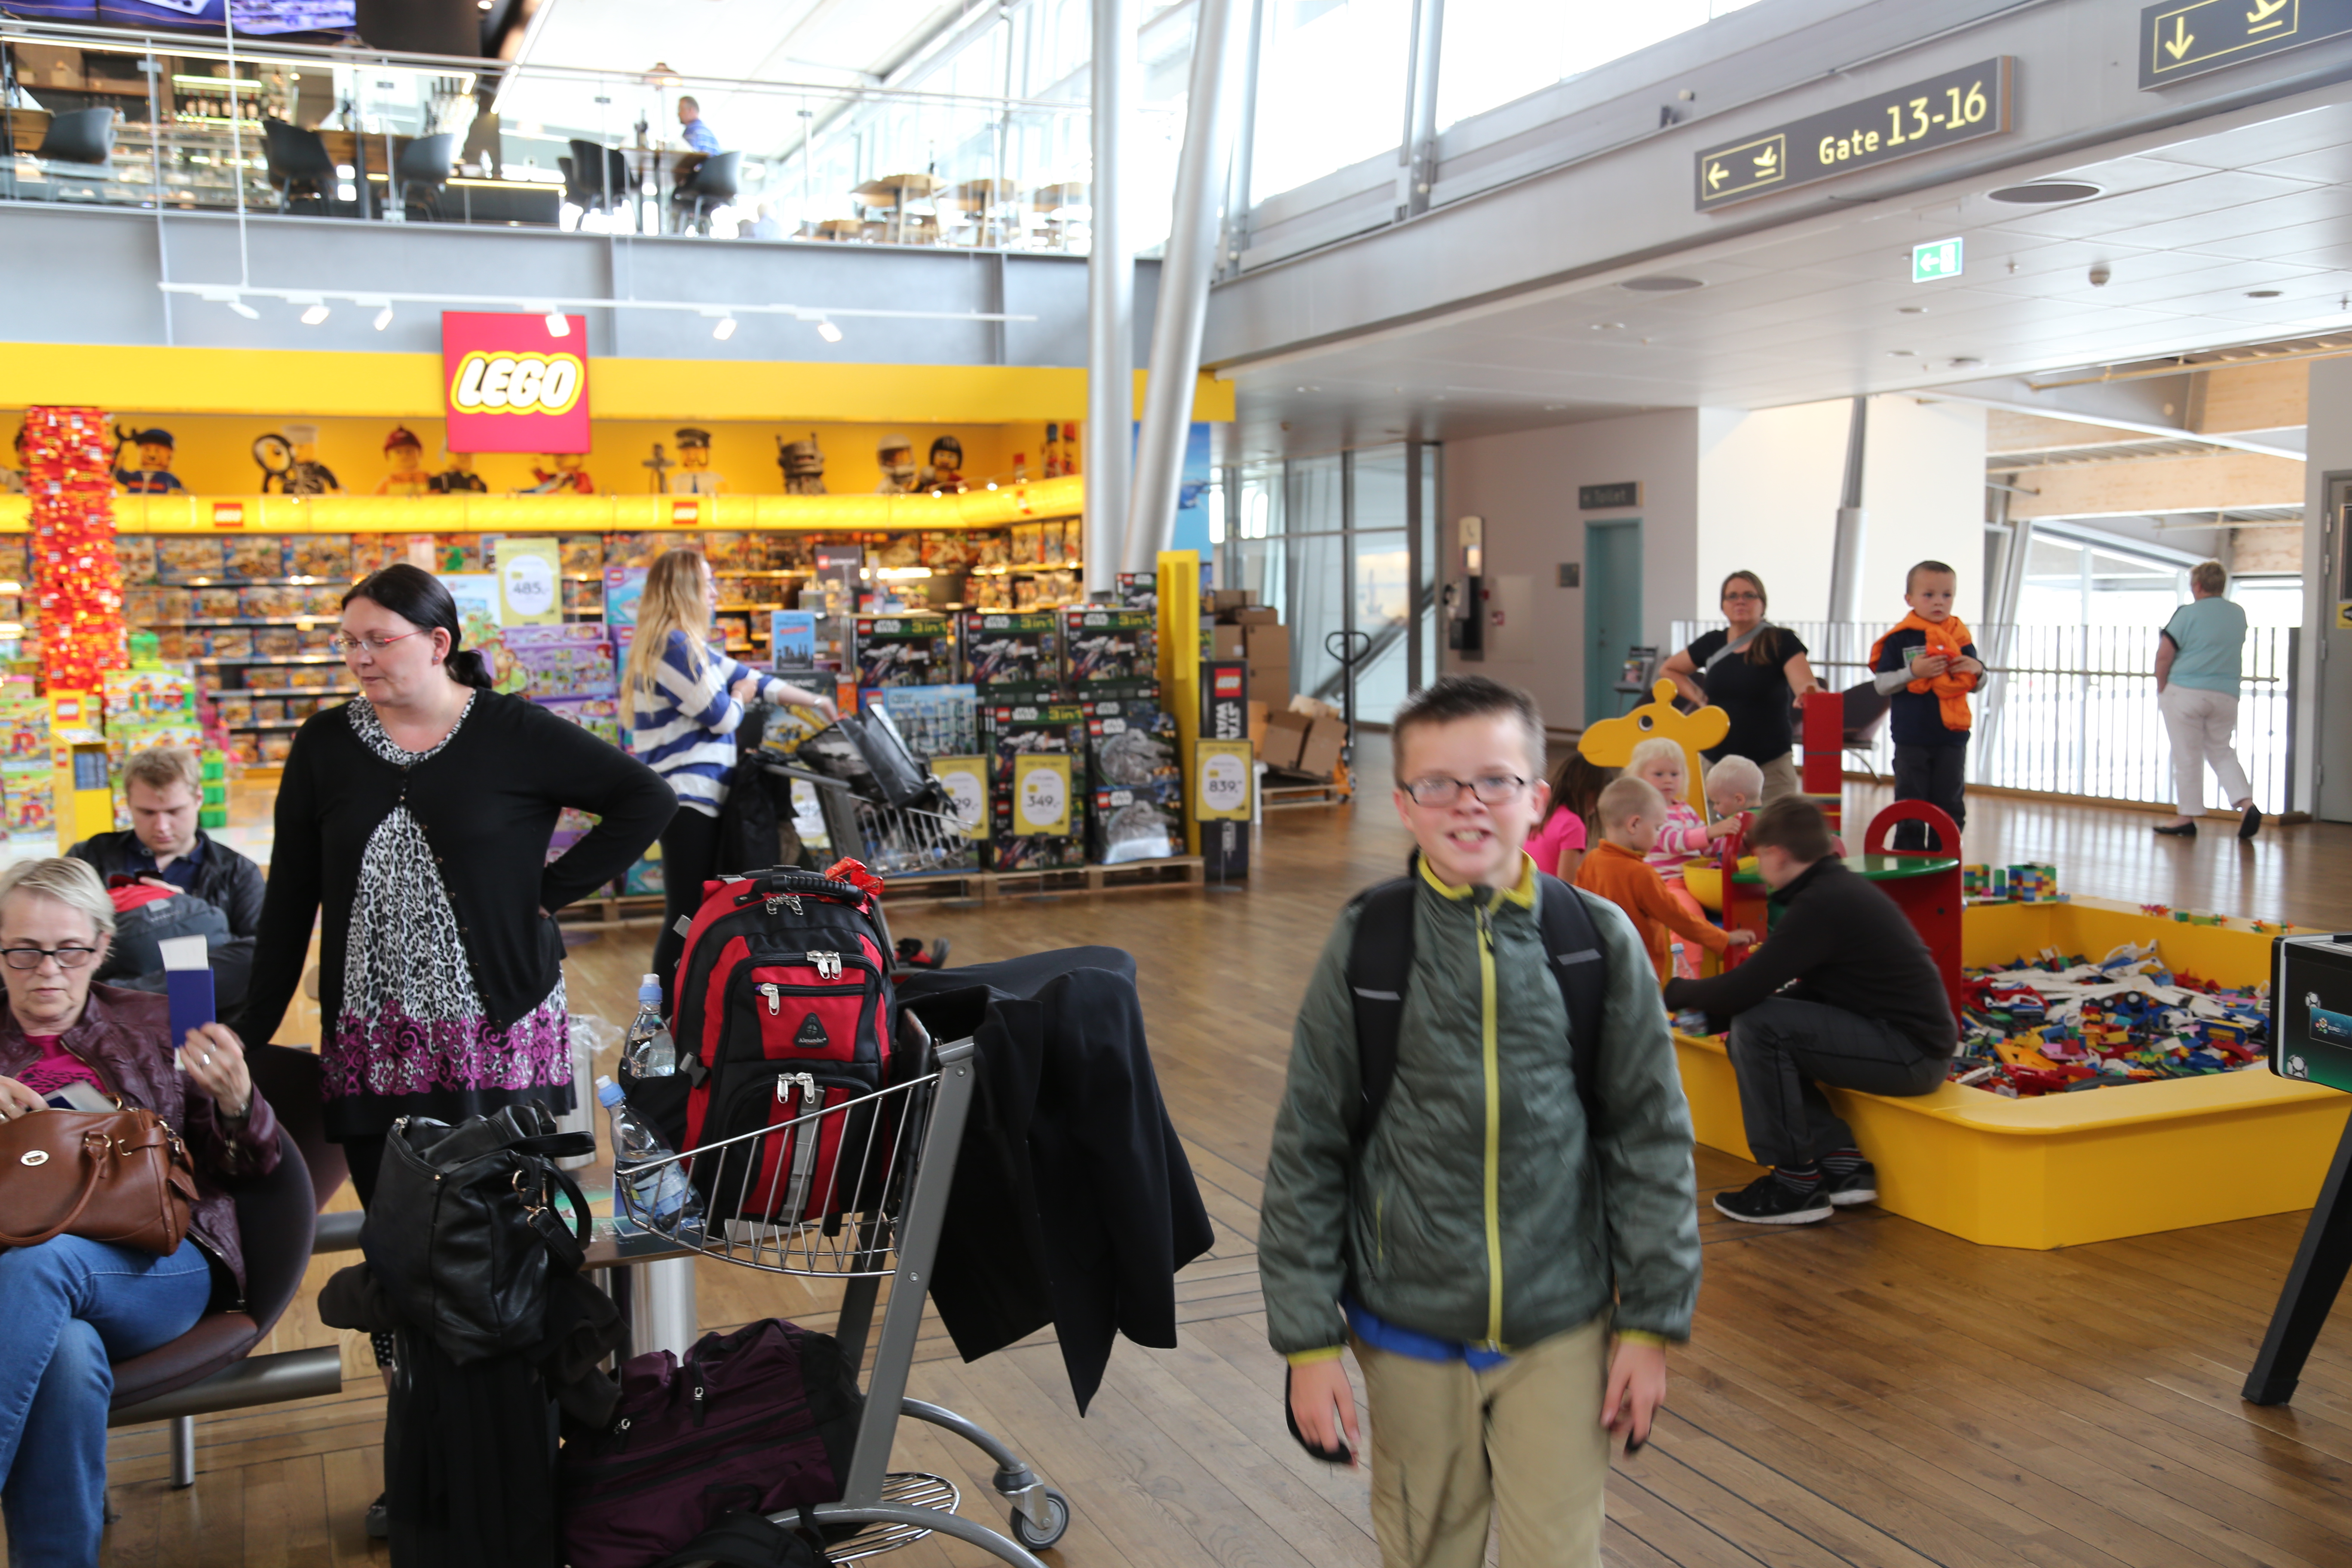 2014 Europe Trip Day 17 - Norway (Legoland Holiday Village, Billund Denmark Airport, Oslo Norway Airport, Harstad / Narvik Evenes Airport, Queen Sonja of Norway (Sonja Haraldsen) on our flight, Harstad Norway, Midnight Sun)